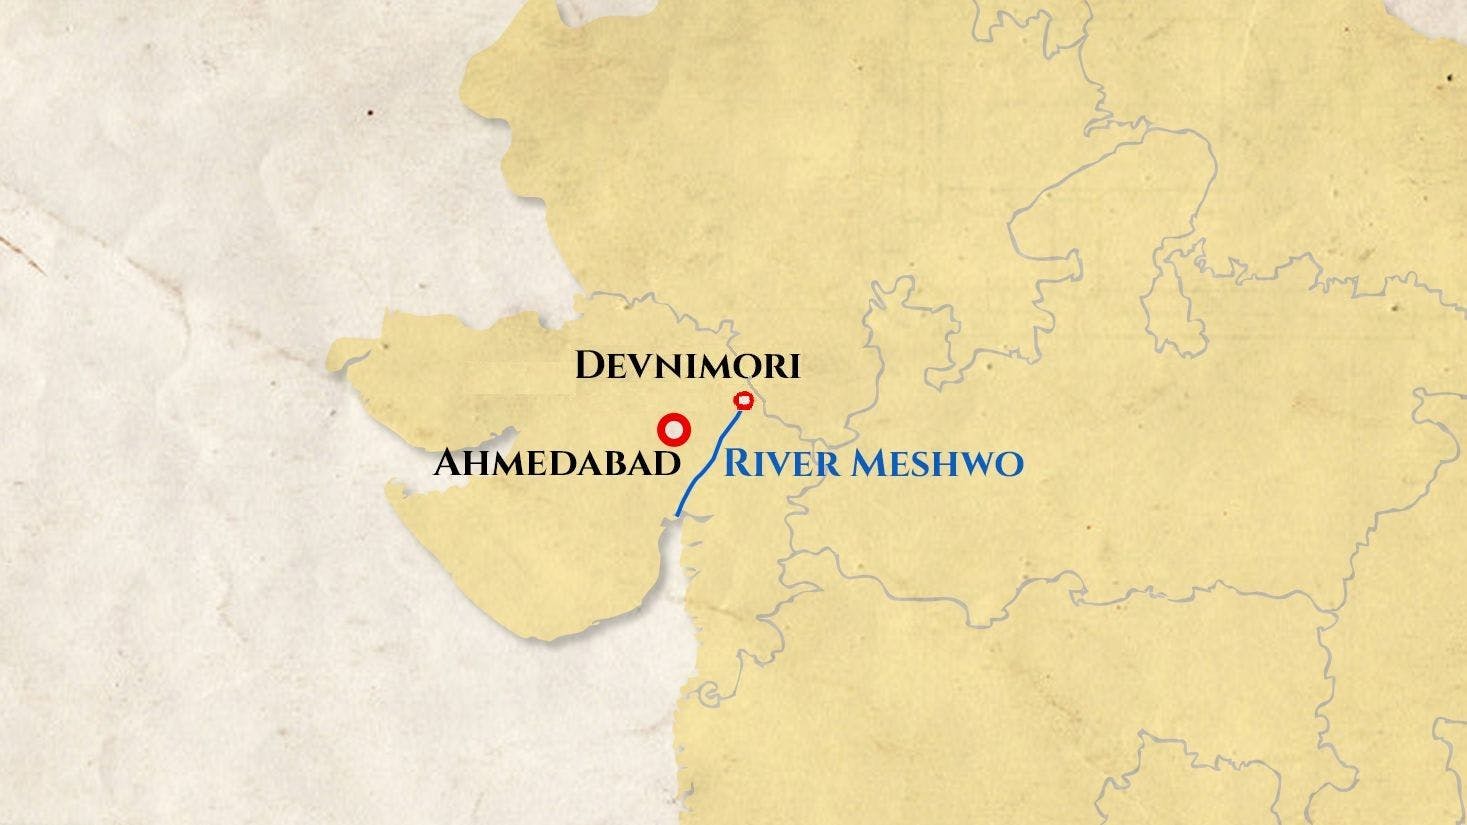 Location of Devnimori on the banks of River Meshwo